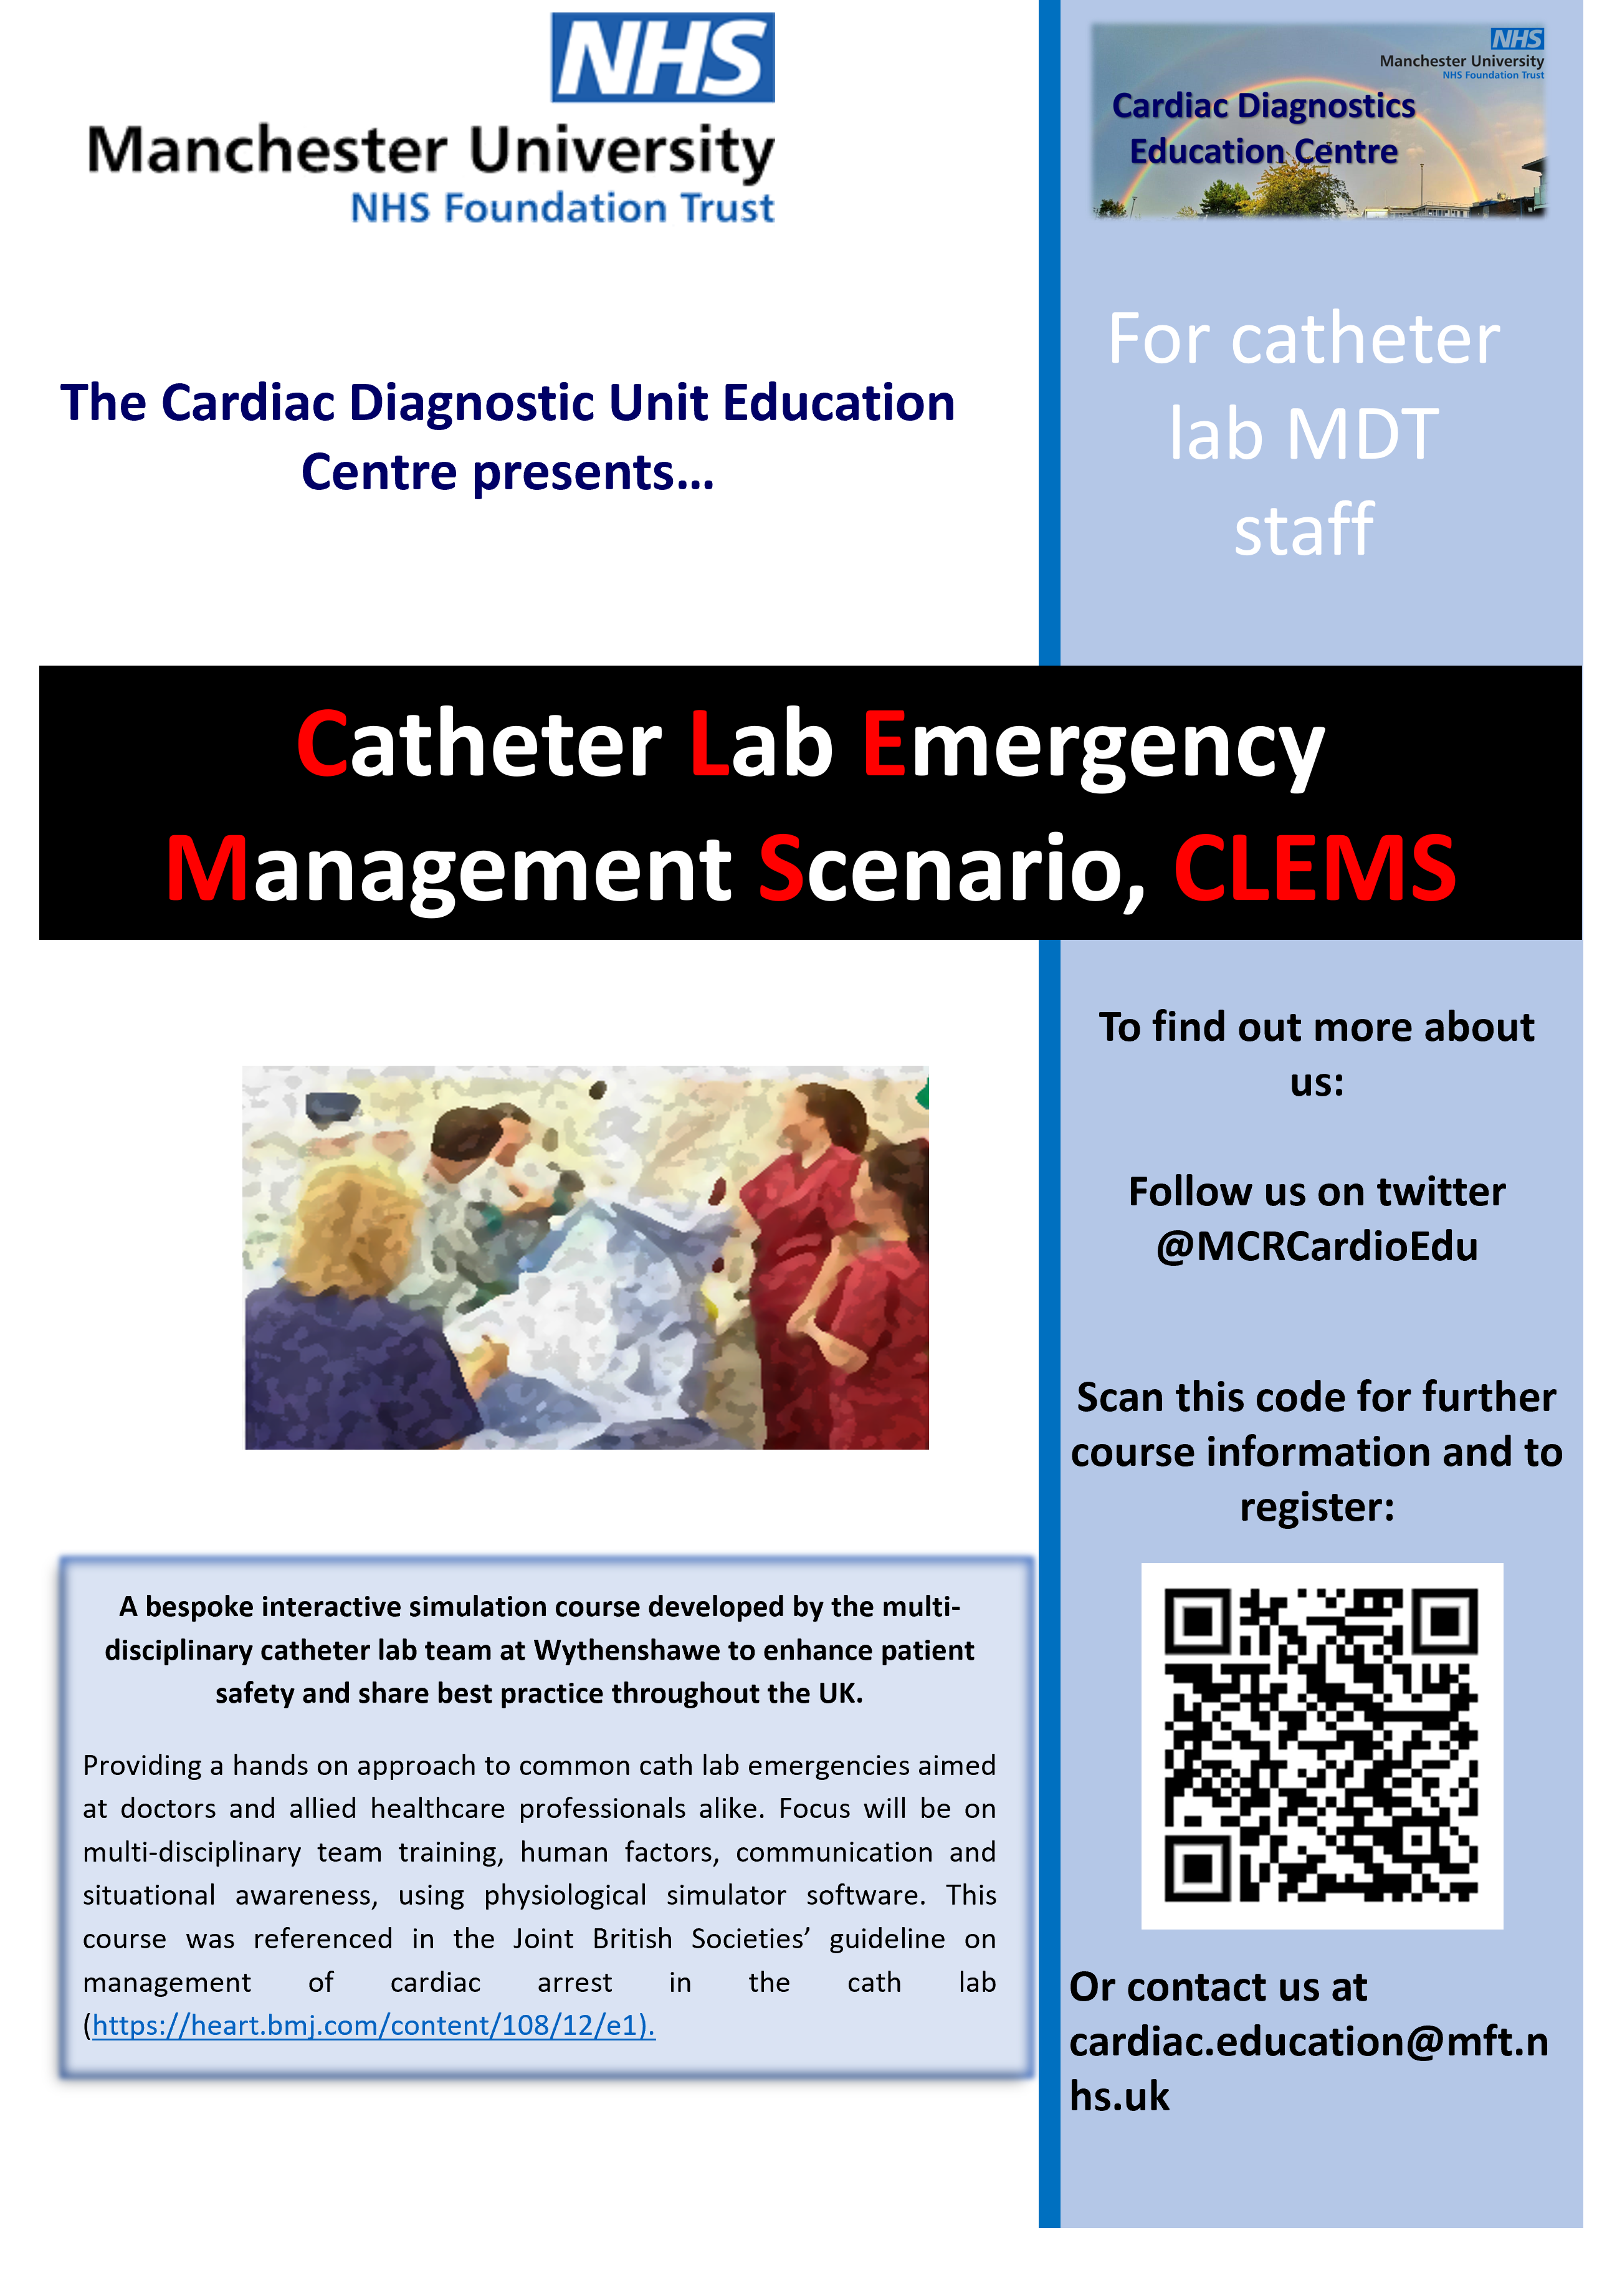 Catheter Lab Emergency Management Simulation, CLEMS